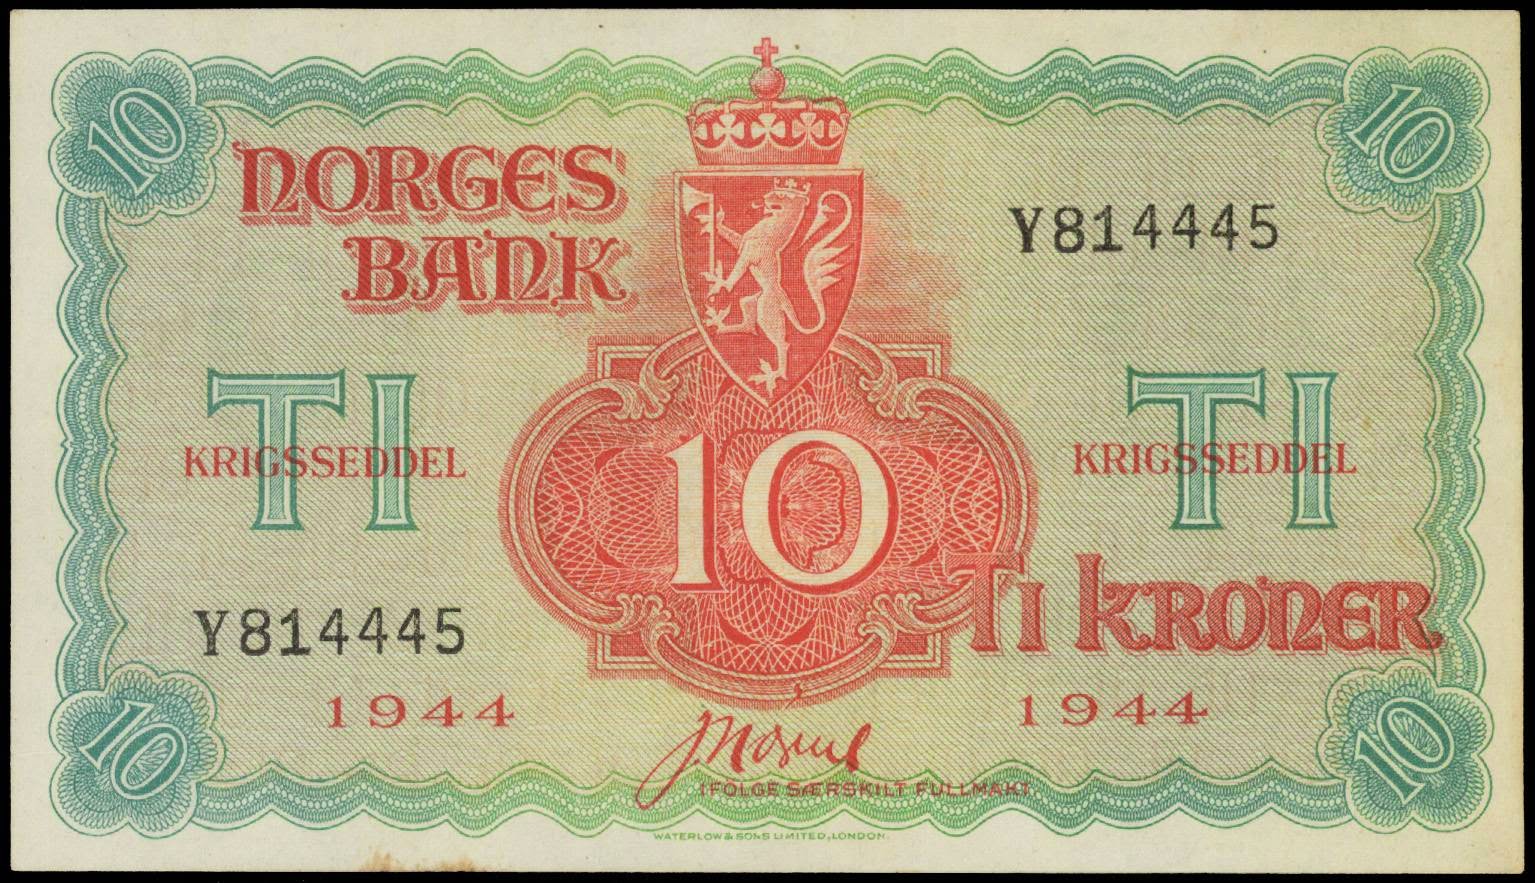 Norway 10 Kroner 1944 Norges Bank